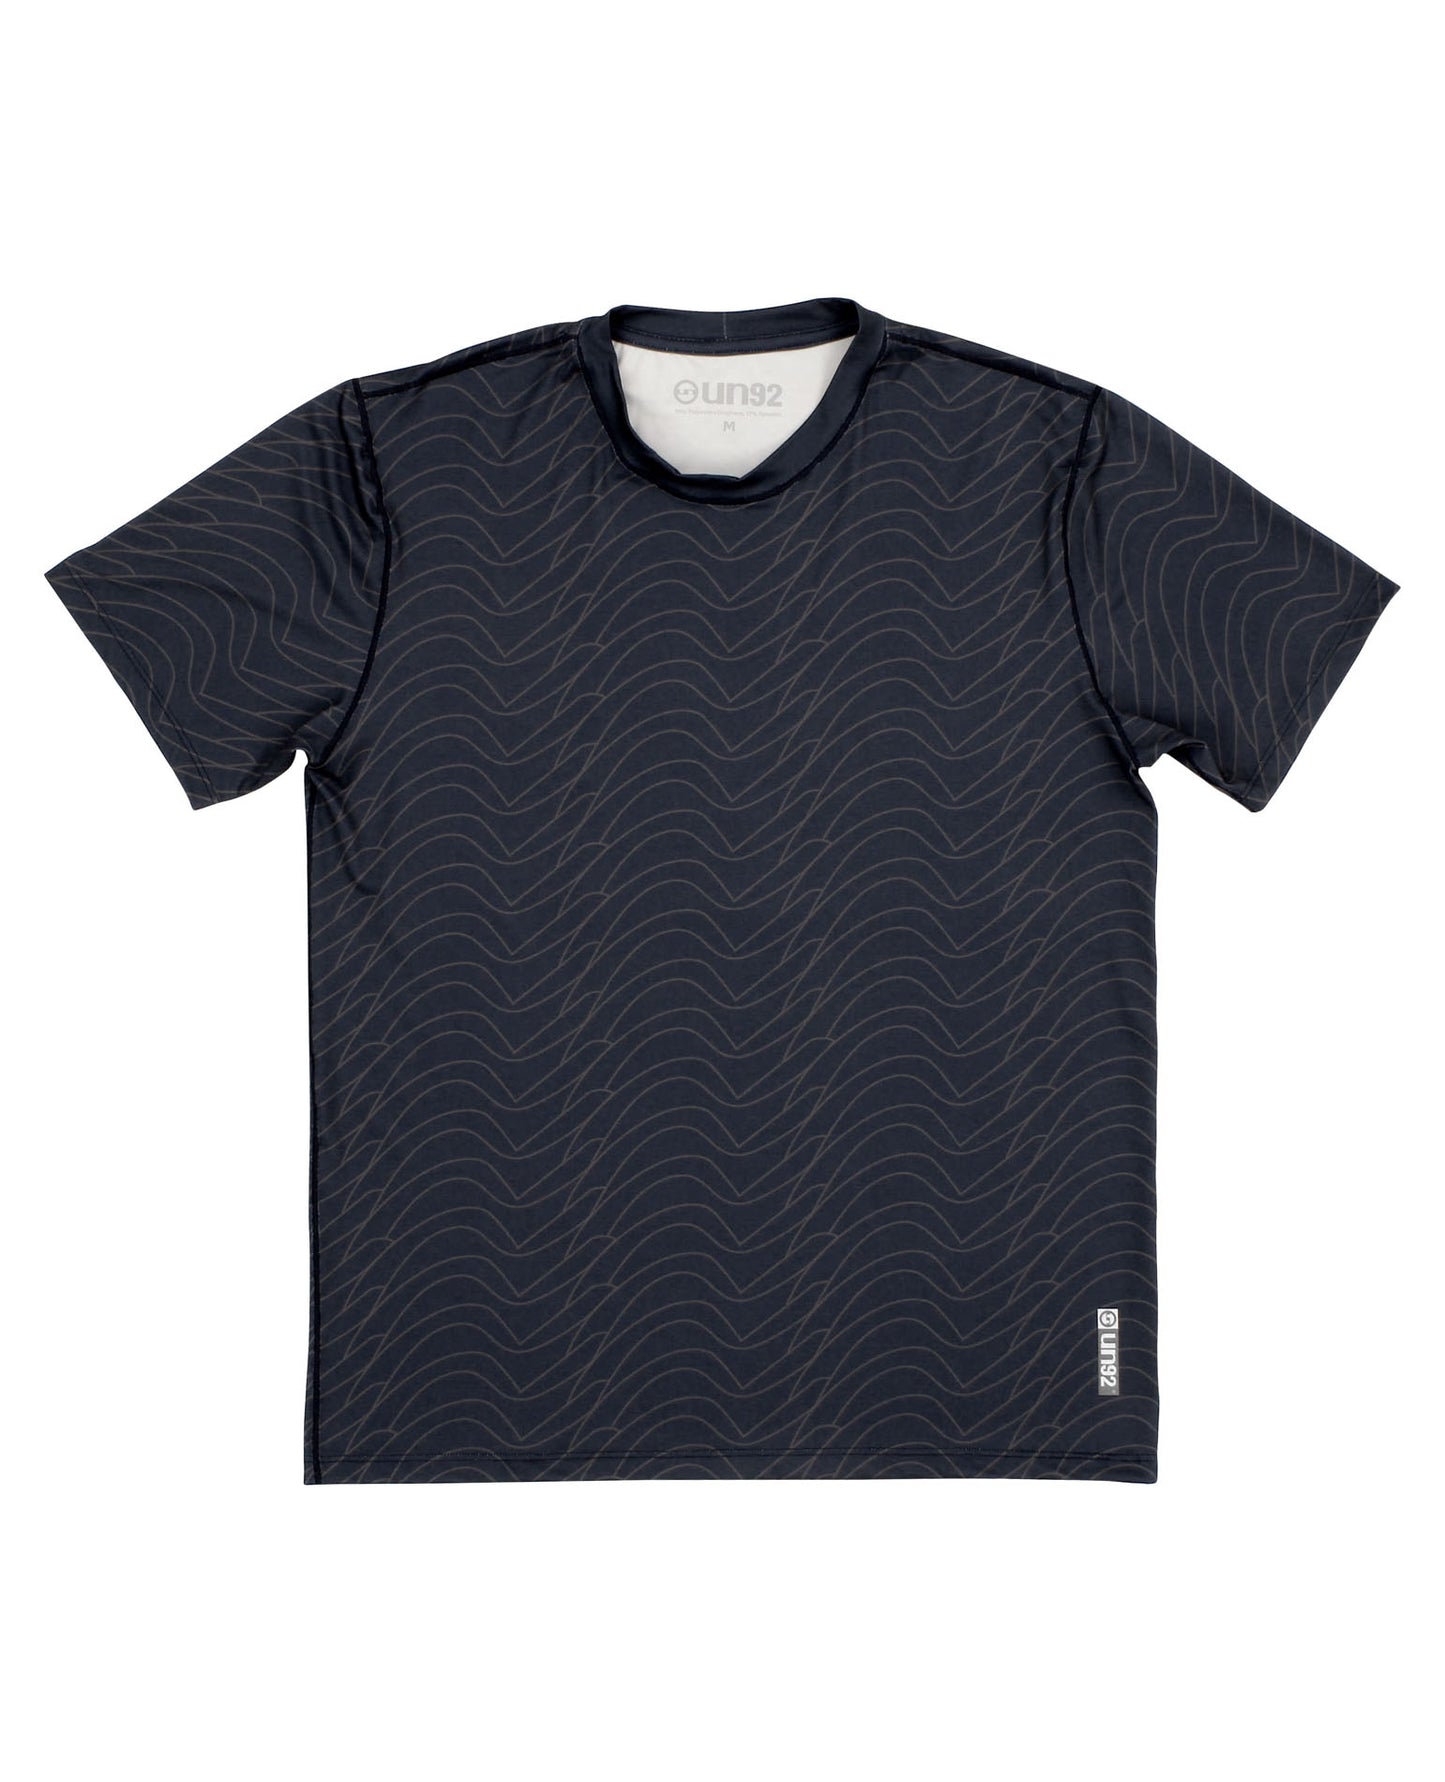 Undulate Repeated-Pattern Graphic T-Shirt